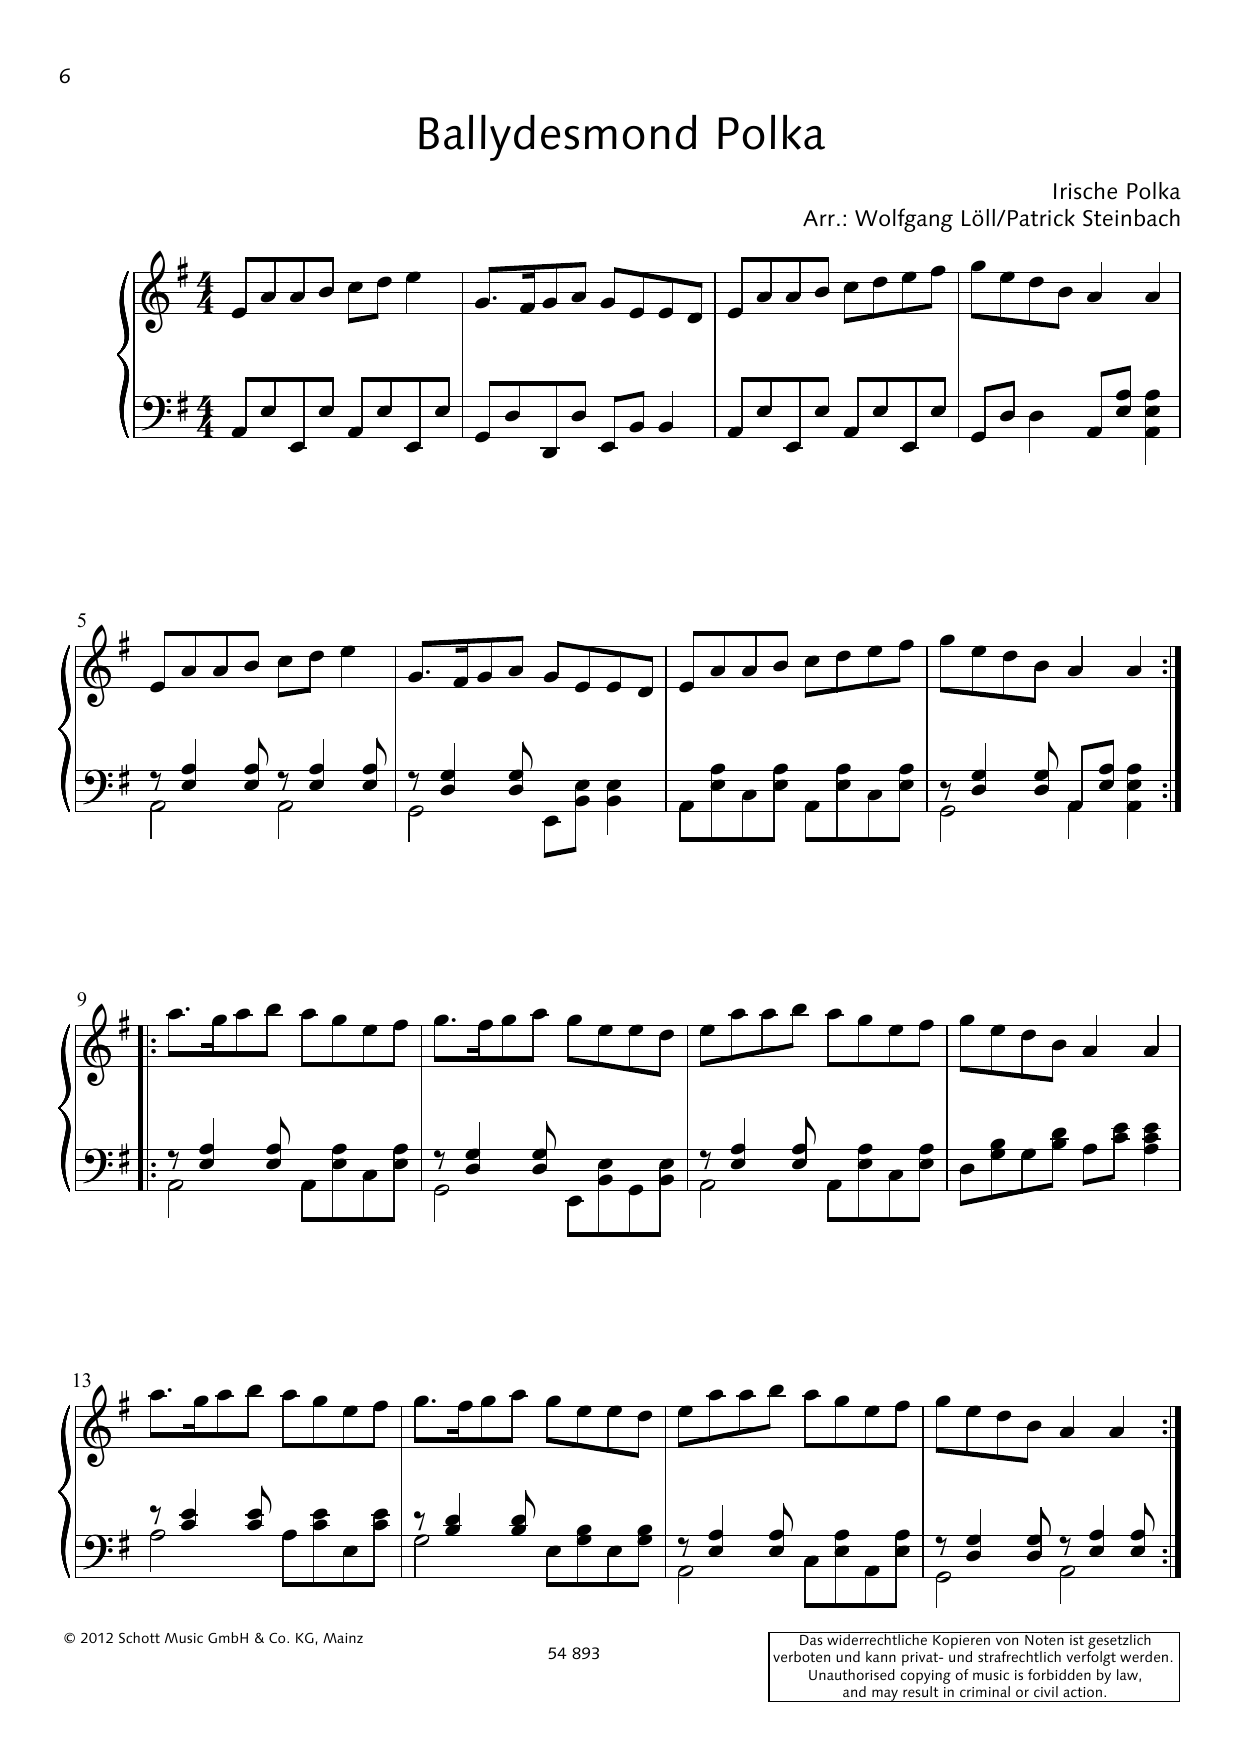 Wolfgang Löll Ballydesmond Polka Sheet Music Notes & Chords for Piano Solo - Download or Print PDF